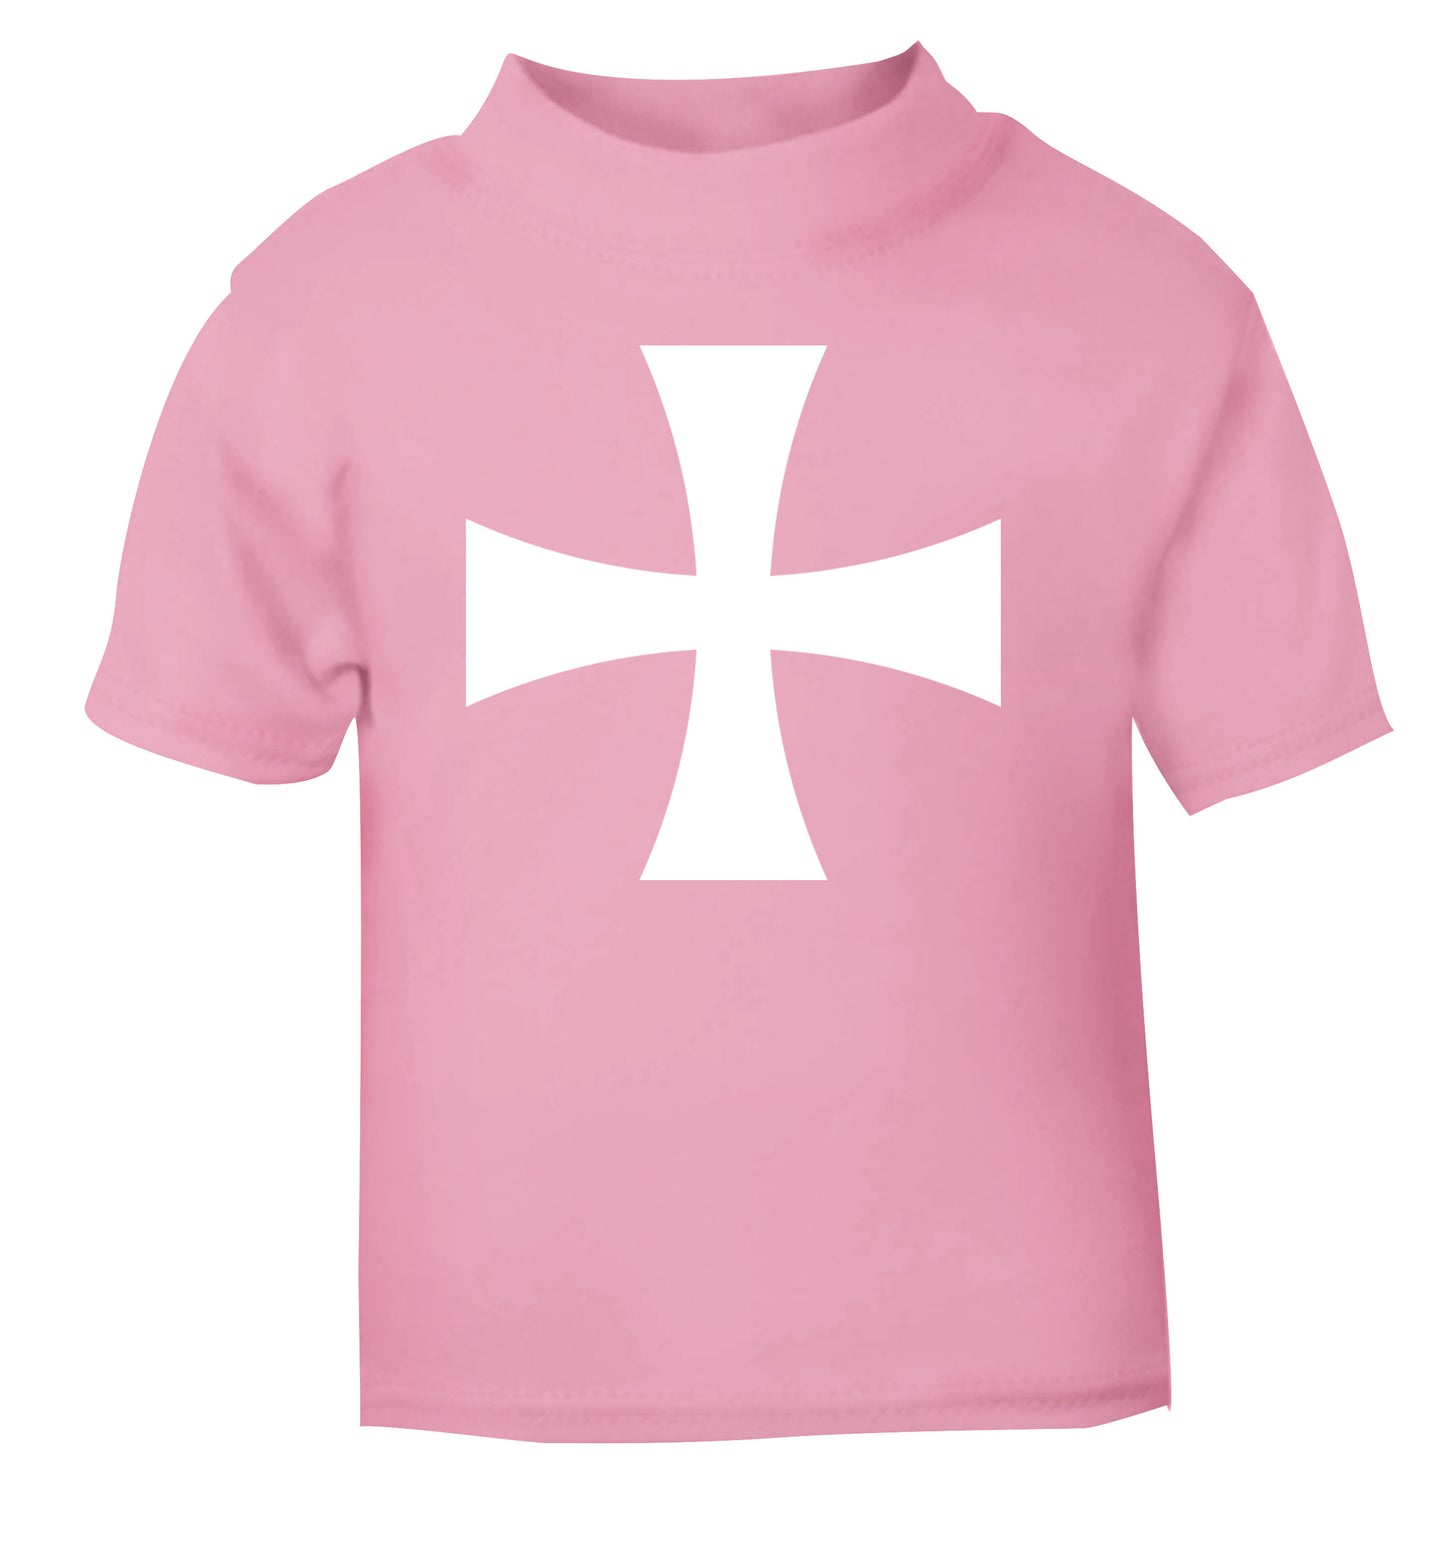 Knights Templar cross light pink Baby Toddler Tshirt 2 Years